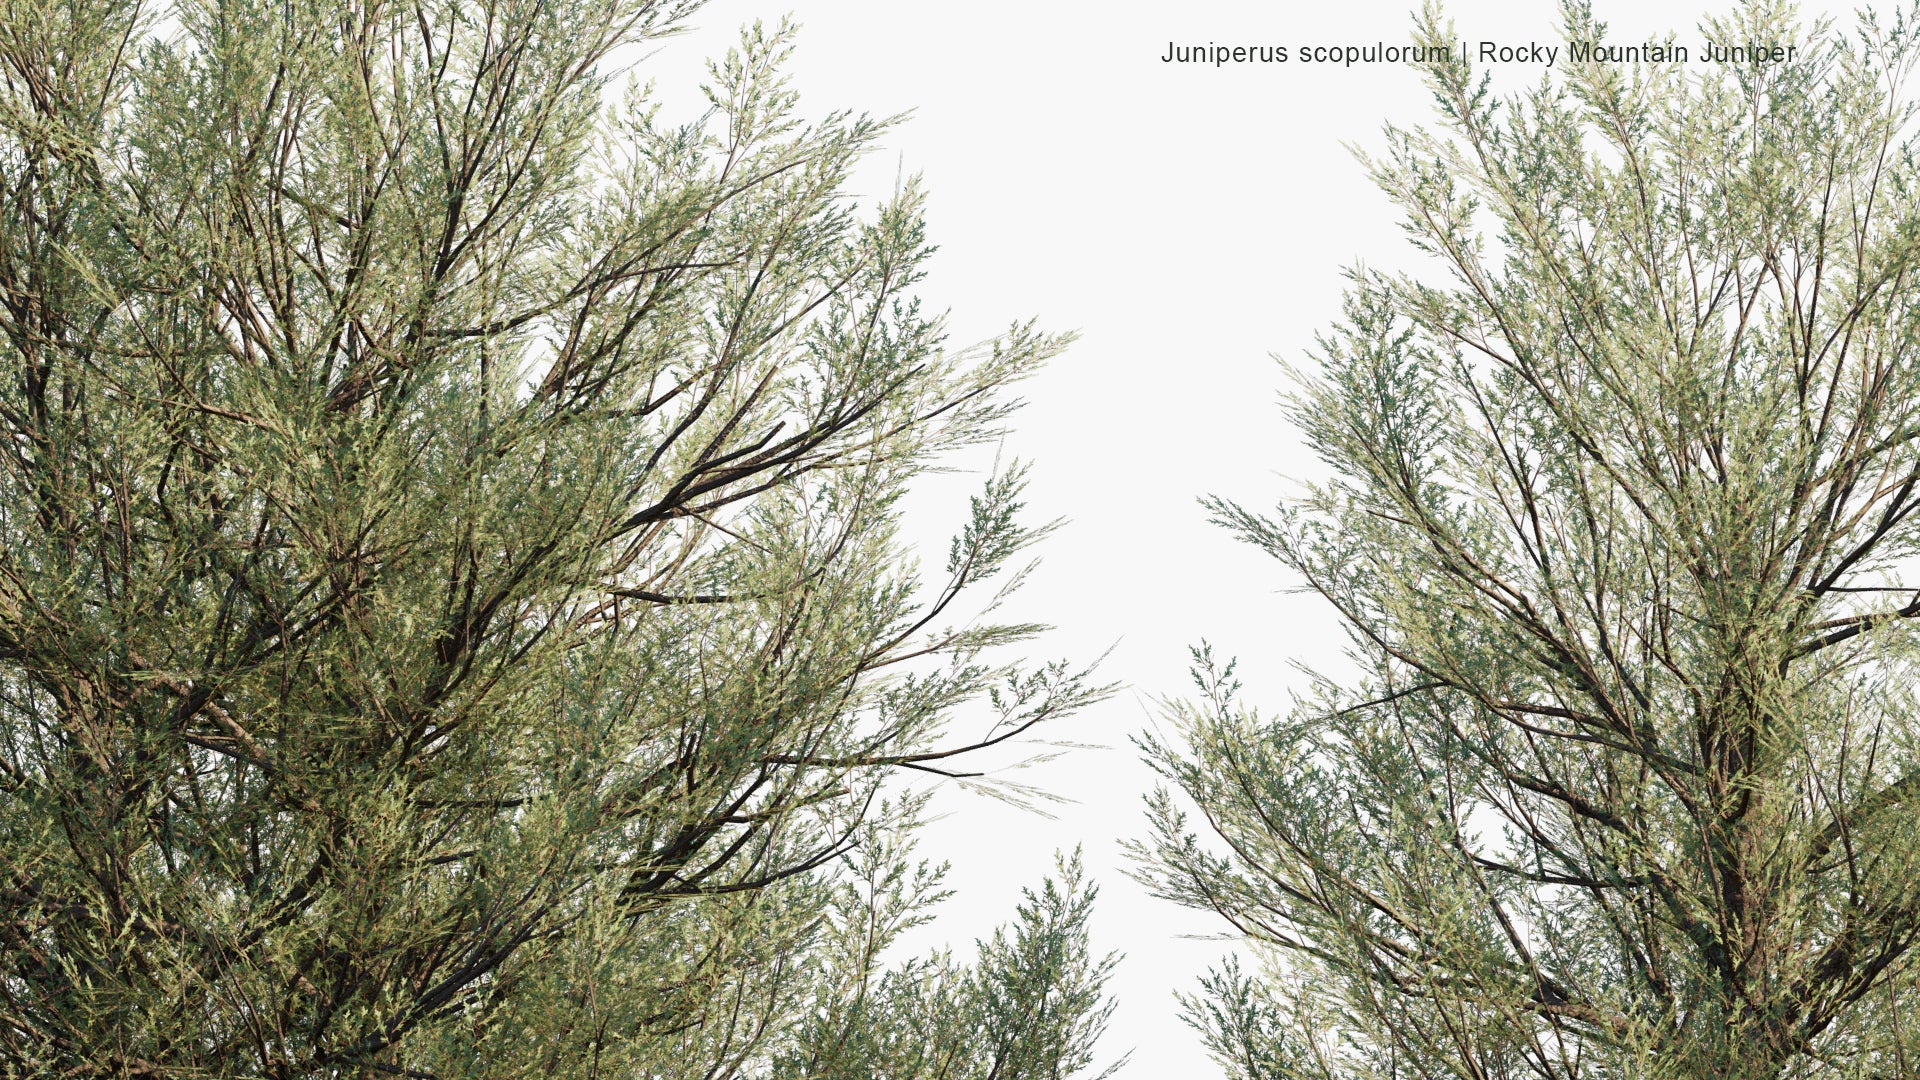 Low Poly Juniperus Scopulorum - Rocky Mountain Juniper (3D Model)